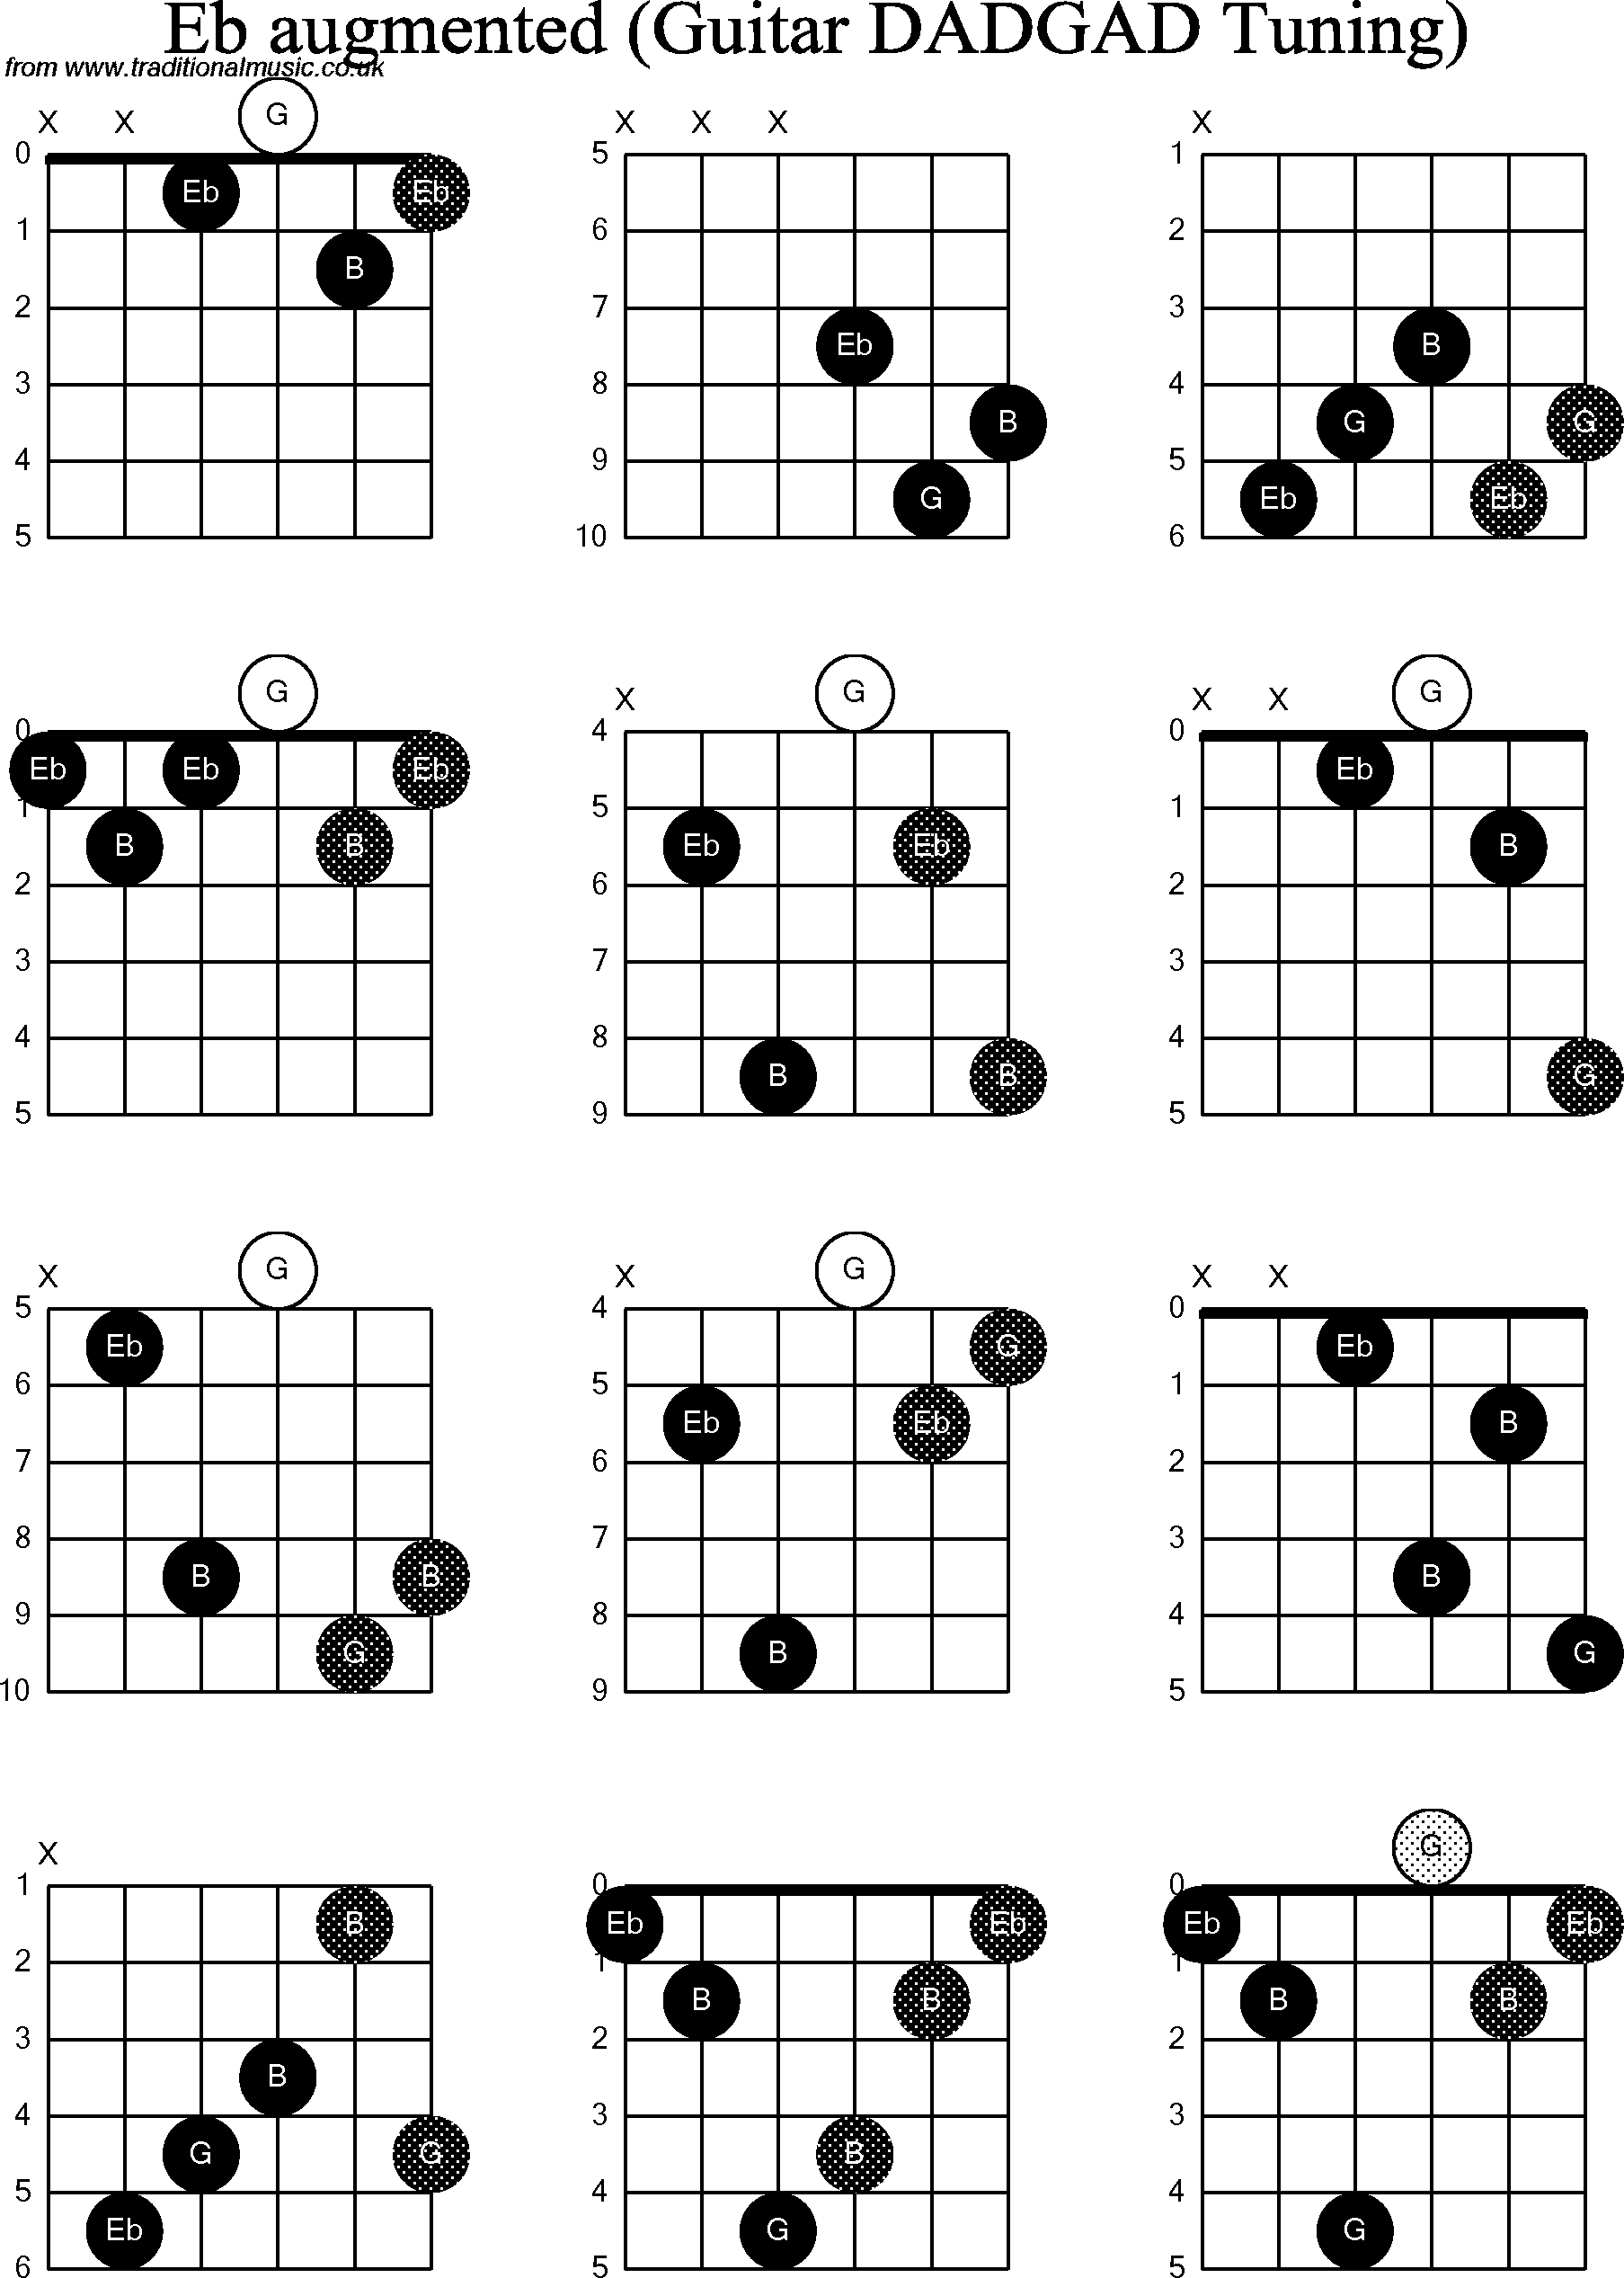 Chord Diagrams for D Modal Guitar(DADGAD), Eb Augmented